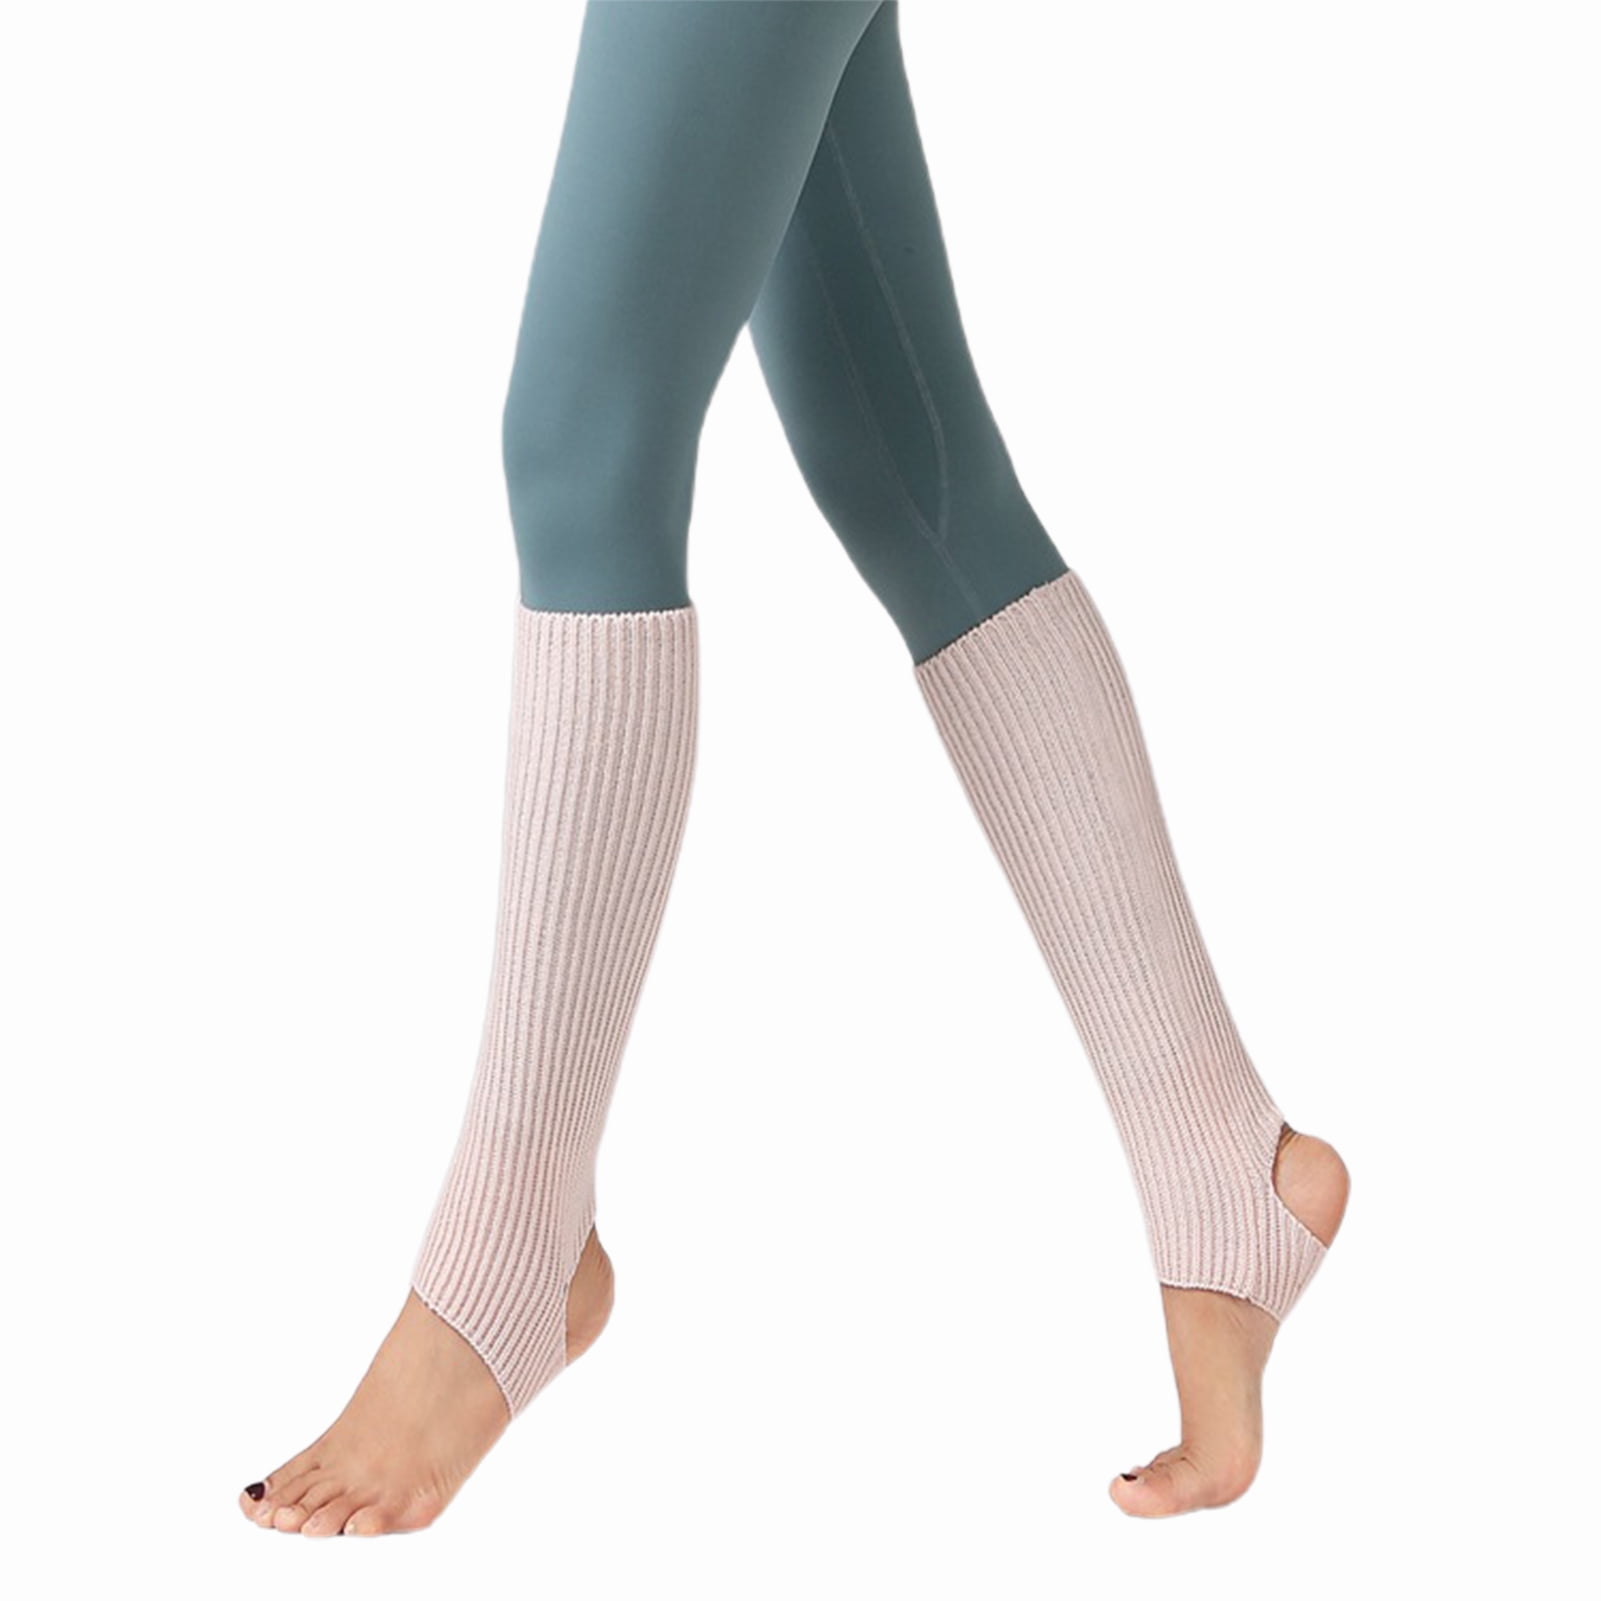 Black Knitted Women Leg Warmers by HP95 Thigh Knit Long Socks Over the Knee Yoga Socks